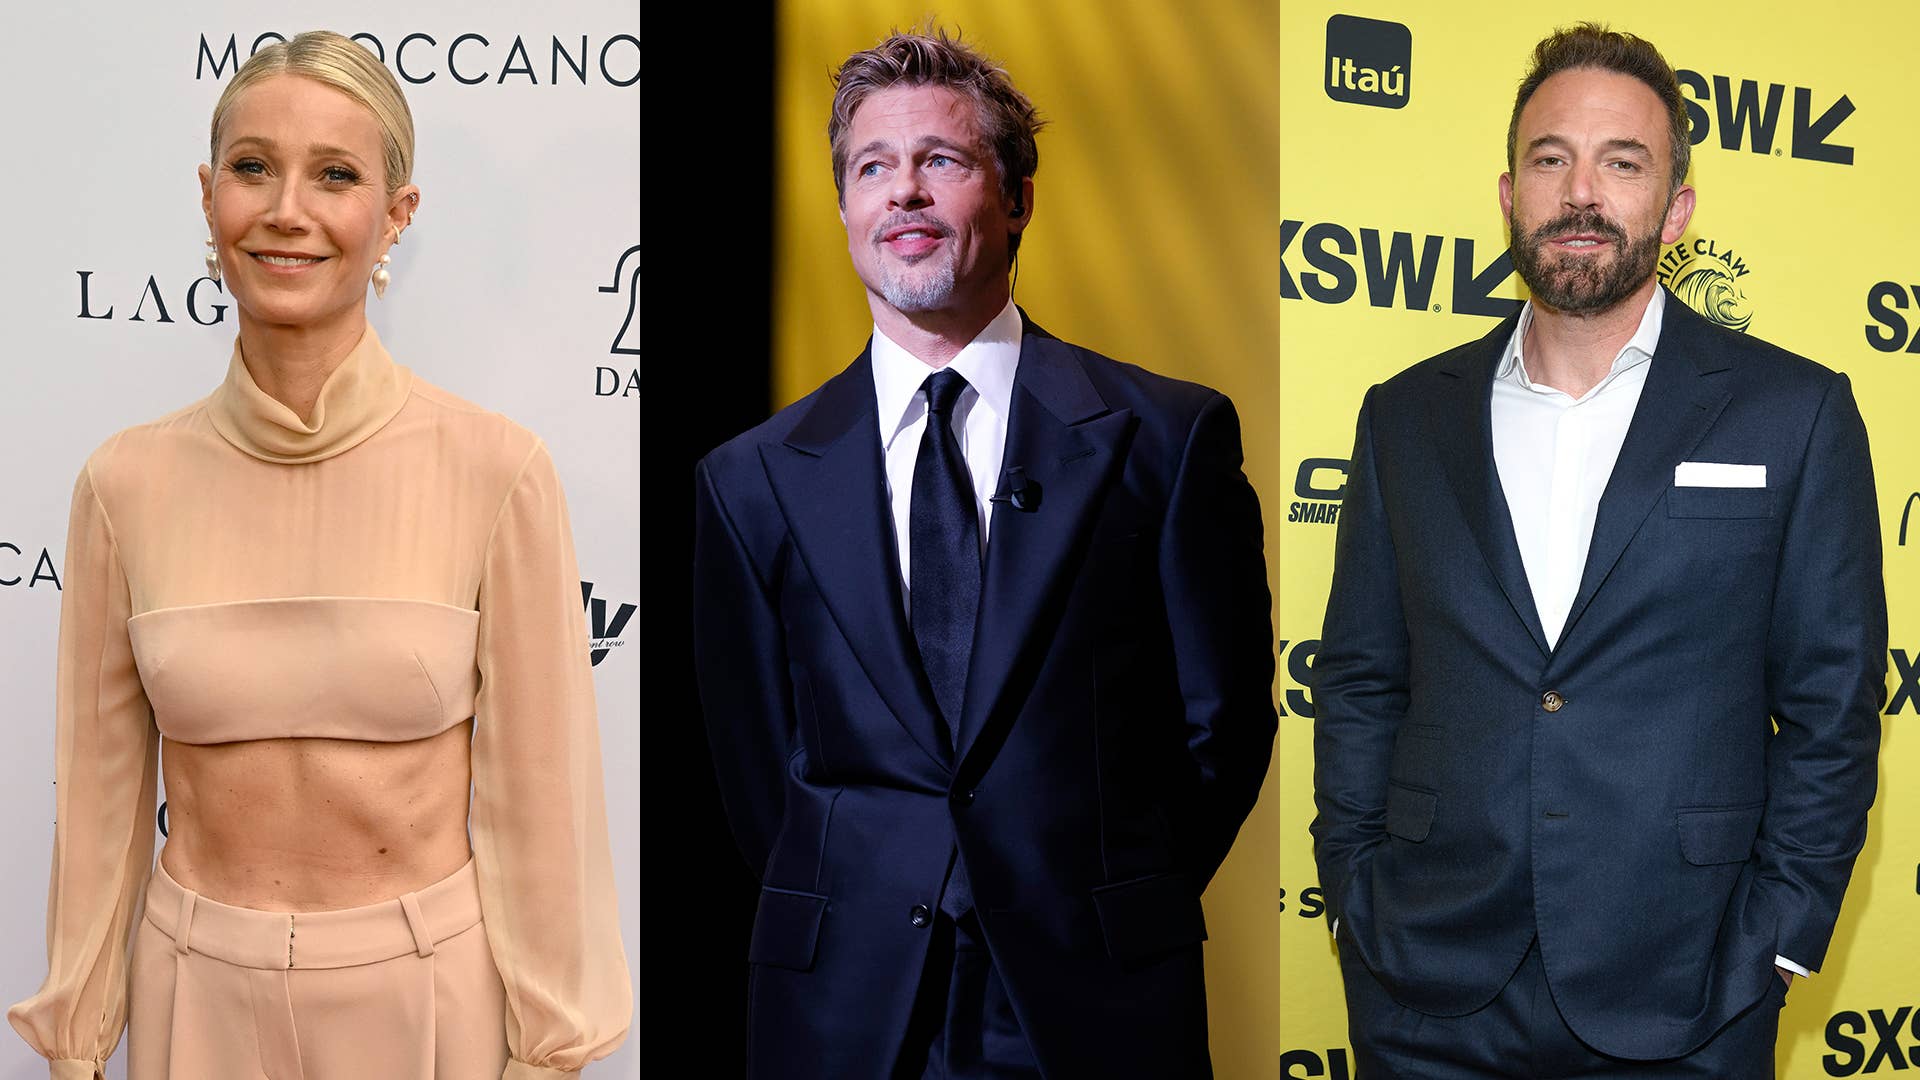 Actors Gwyyneth Paltrow, Brad Pitt, and Ben Affleck